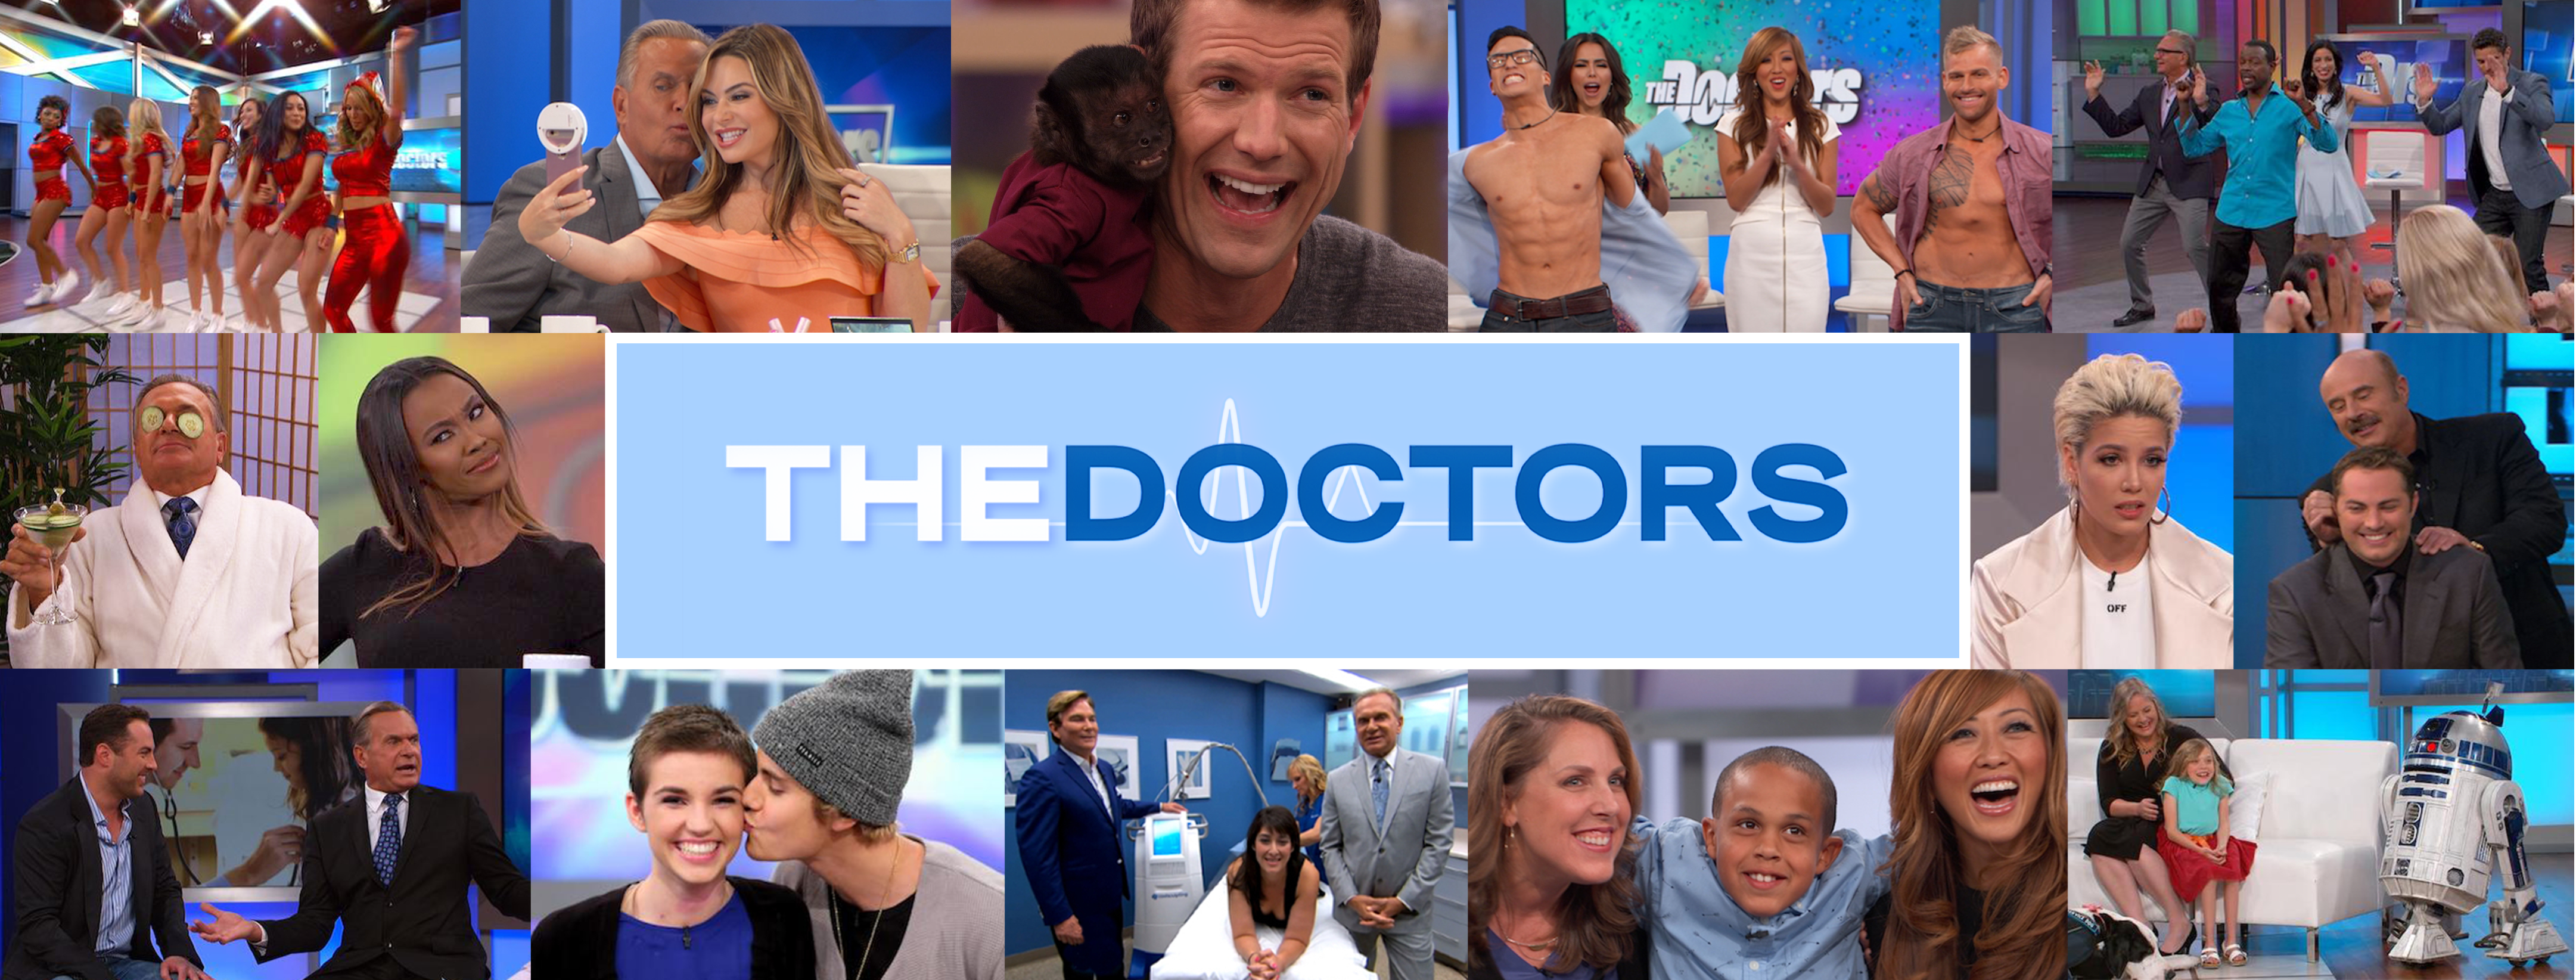 Chaz Bono's Brand New Look! | The Doctors TV Show